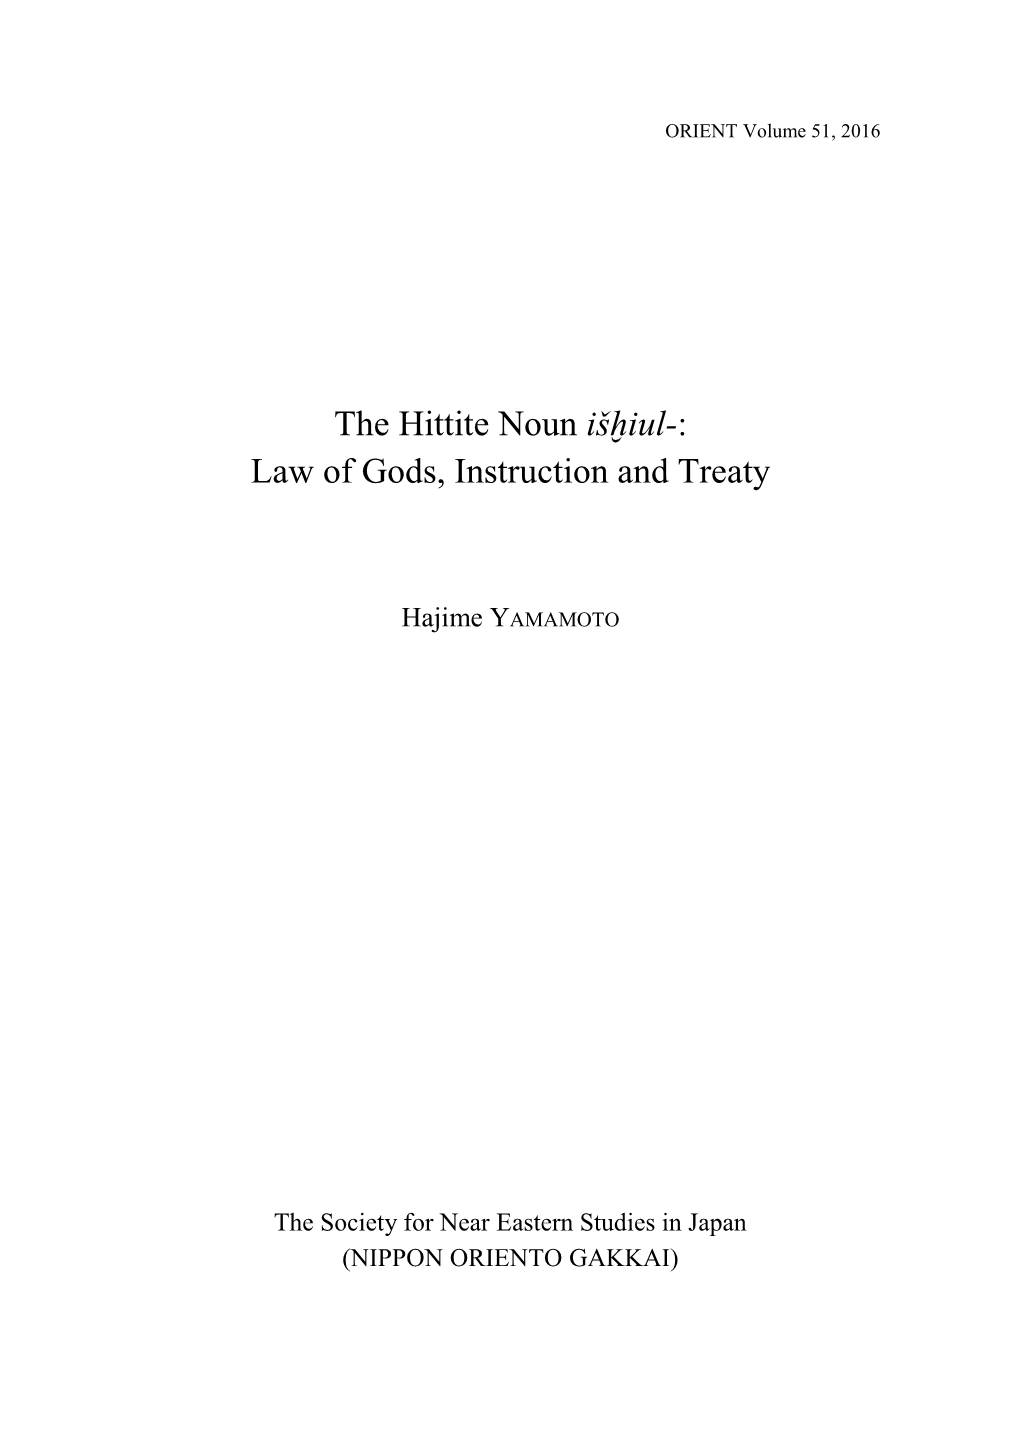 The Hittite Noun Išḫiul-: Law of Gods, Instruction and Treaty